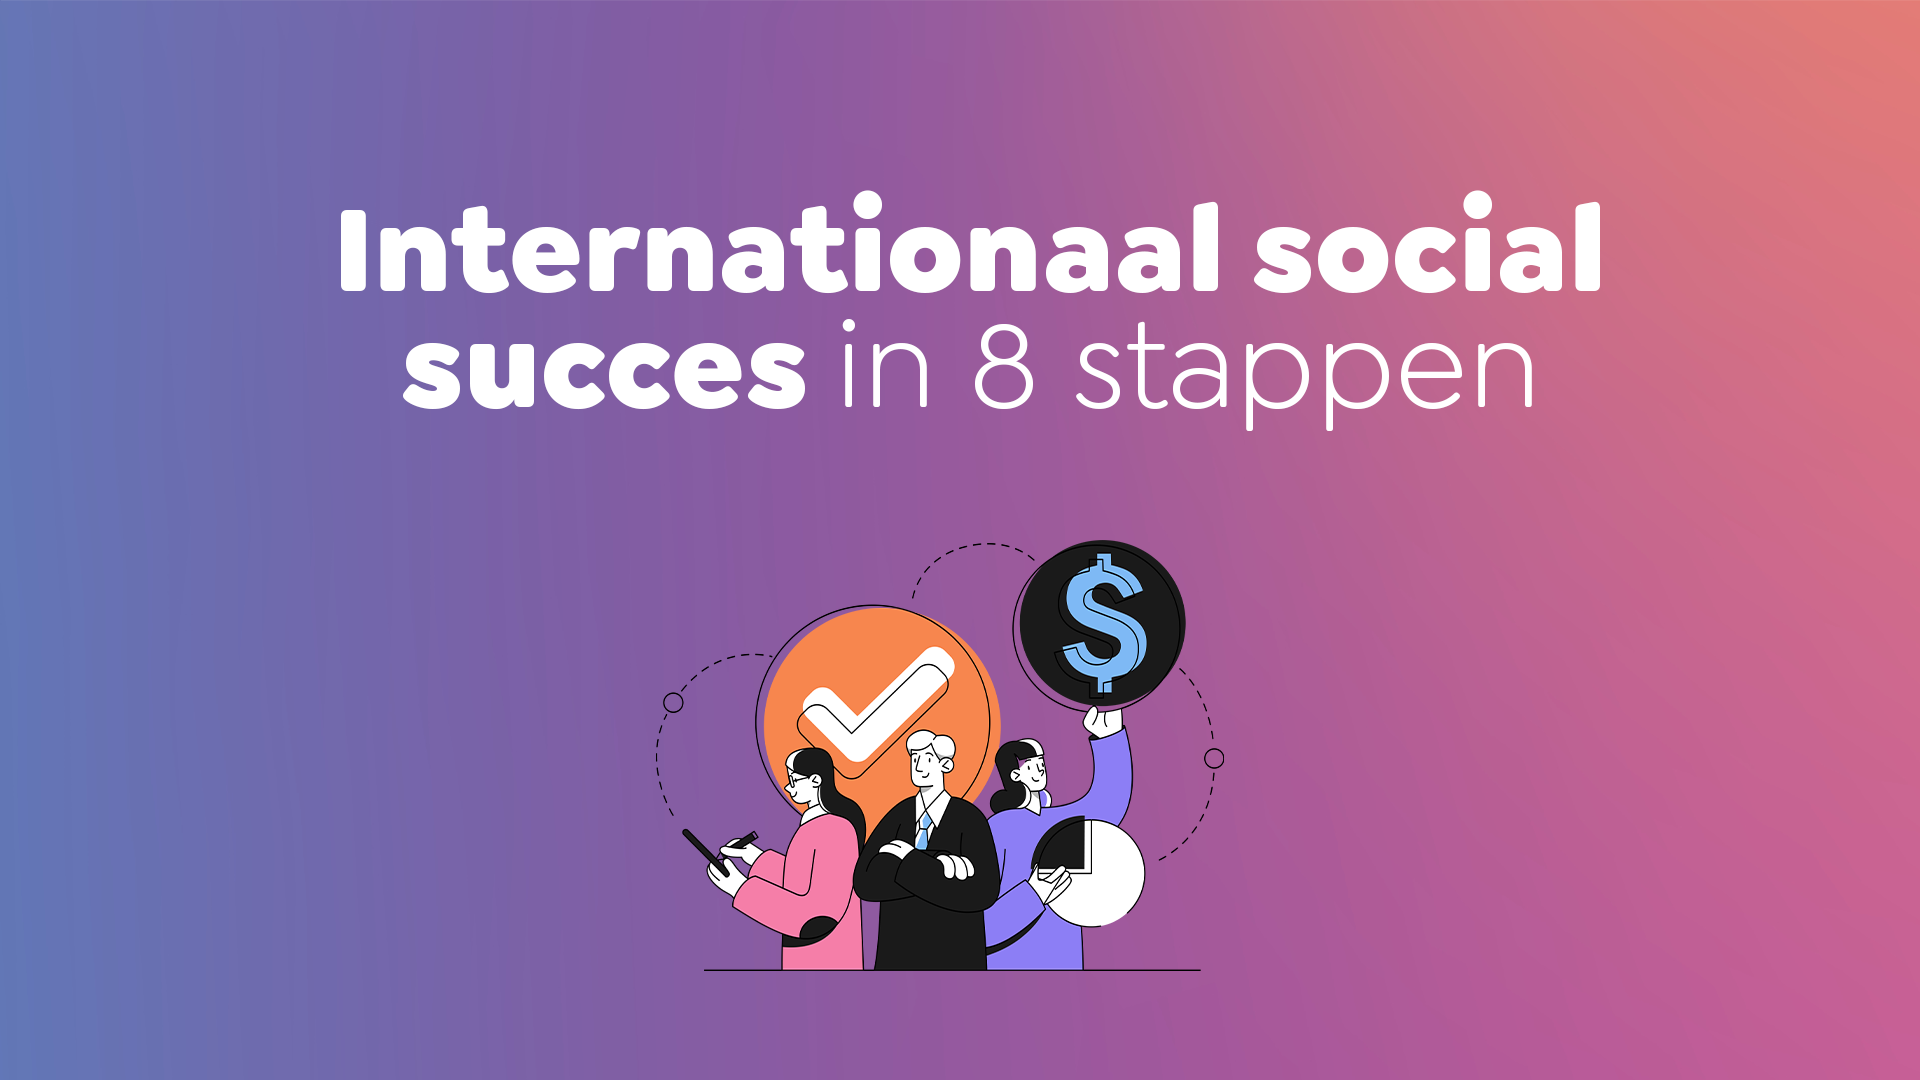 Internationaal social succes in 8 stappen